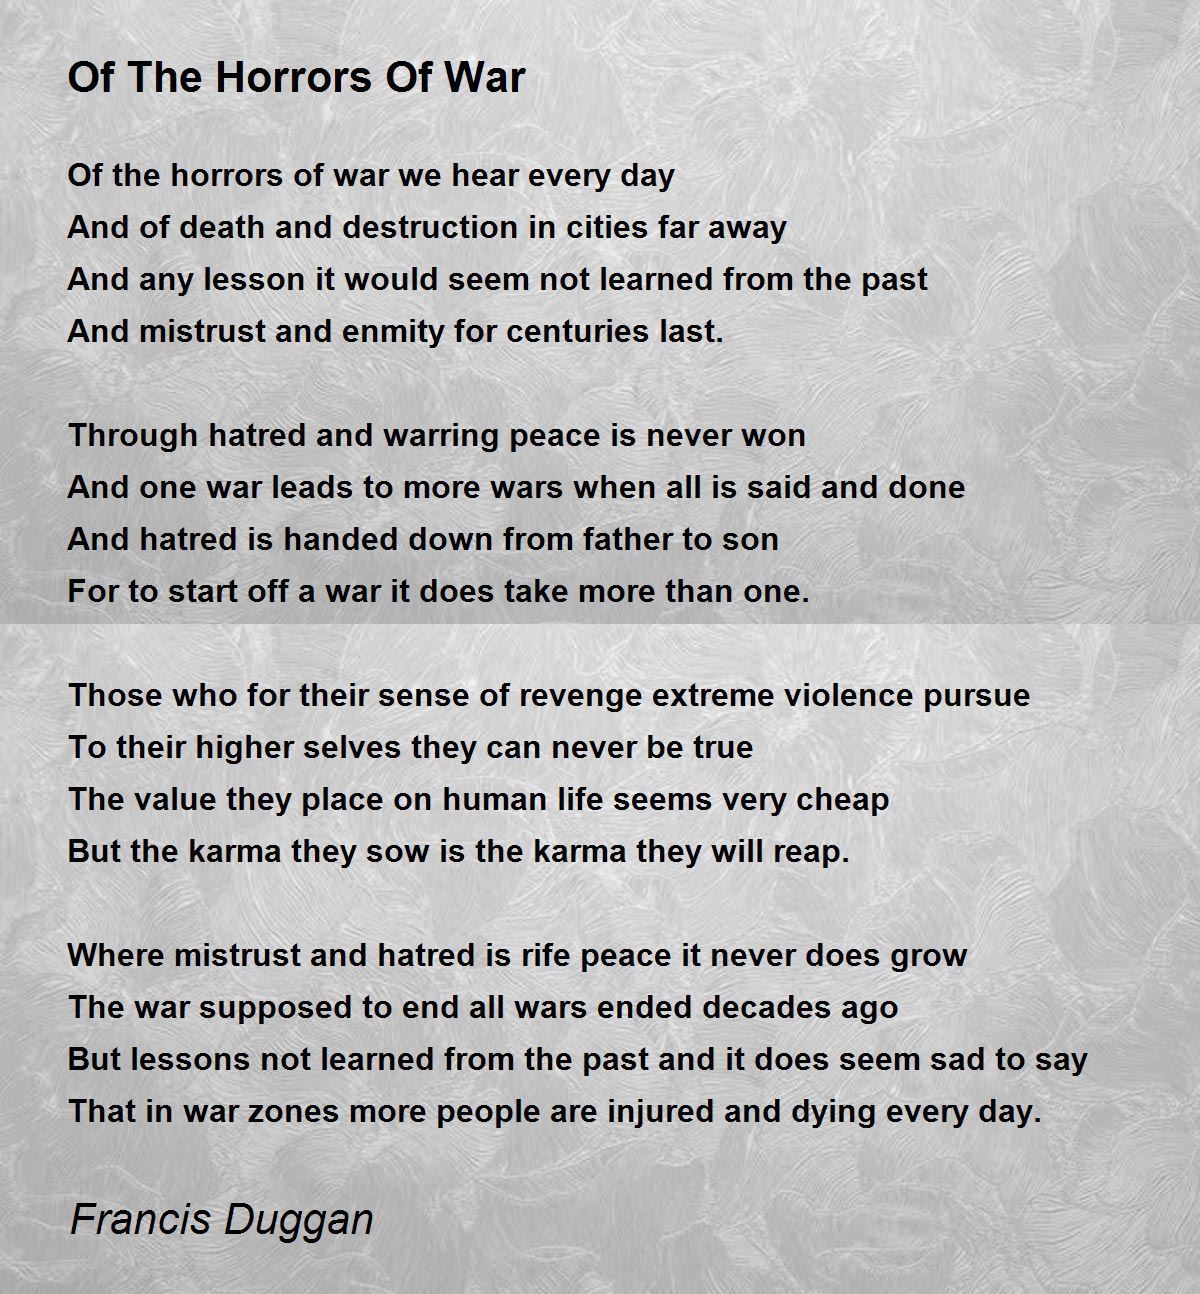 sad poems about war